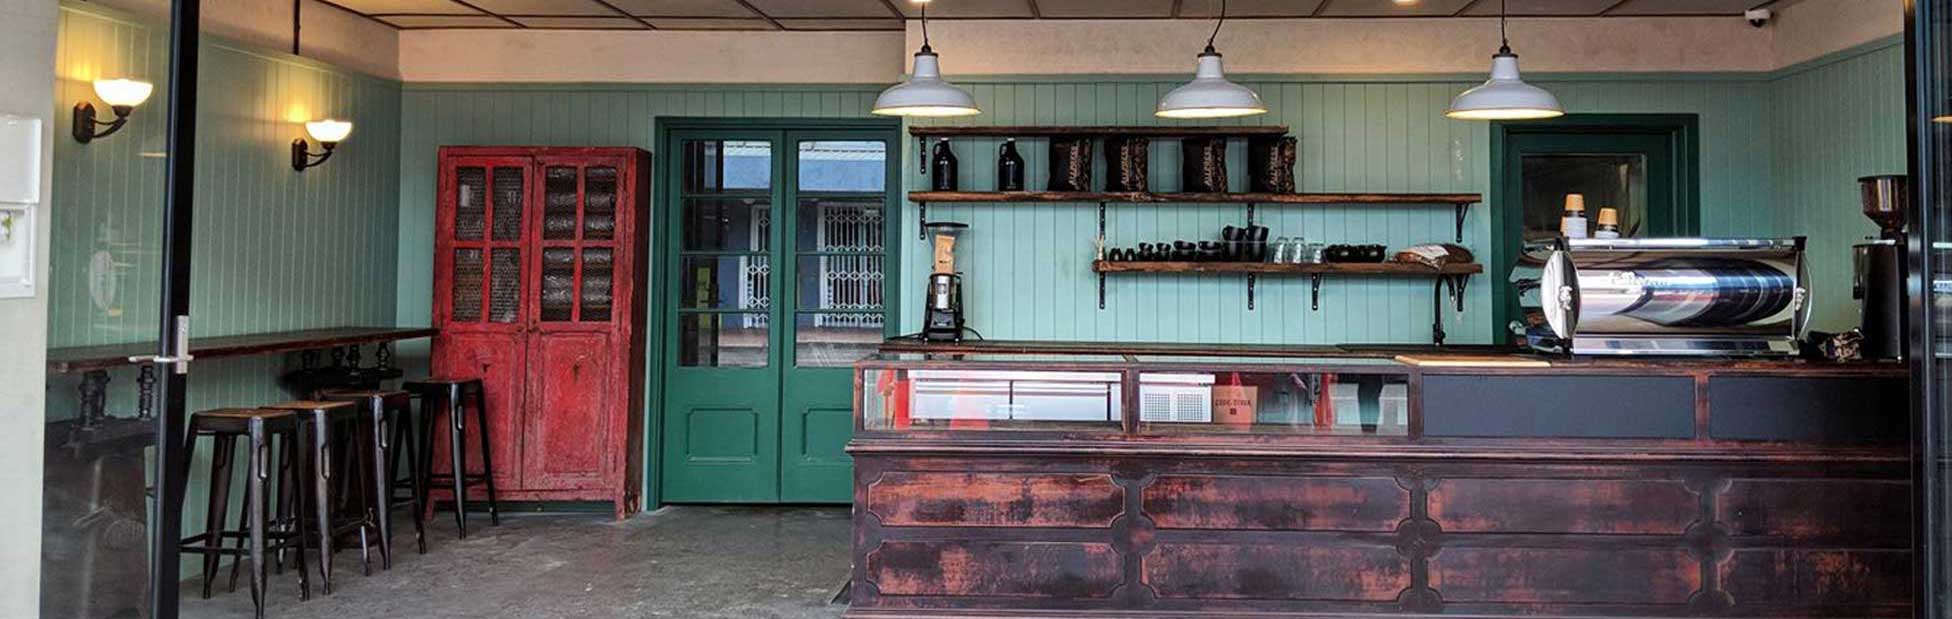 Vintage styled bar